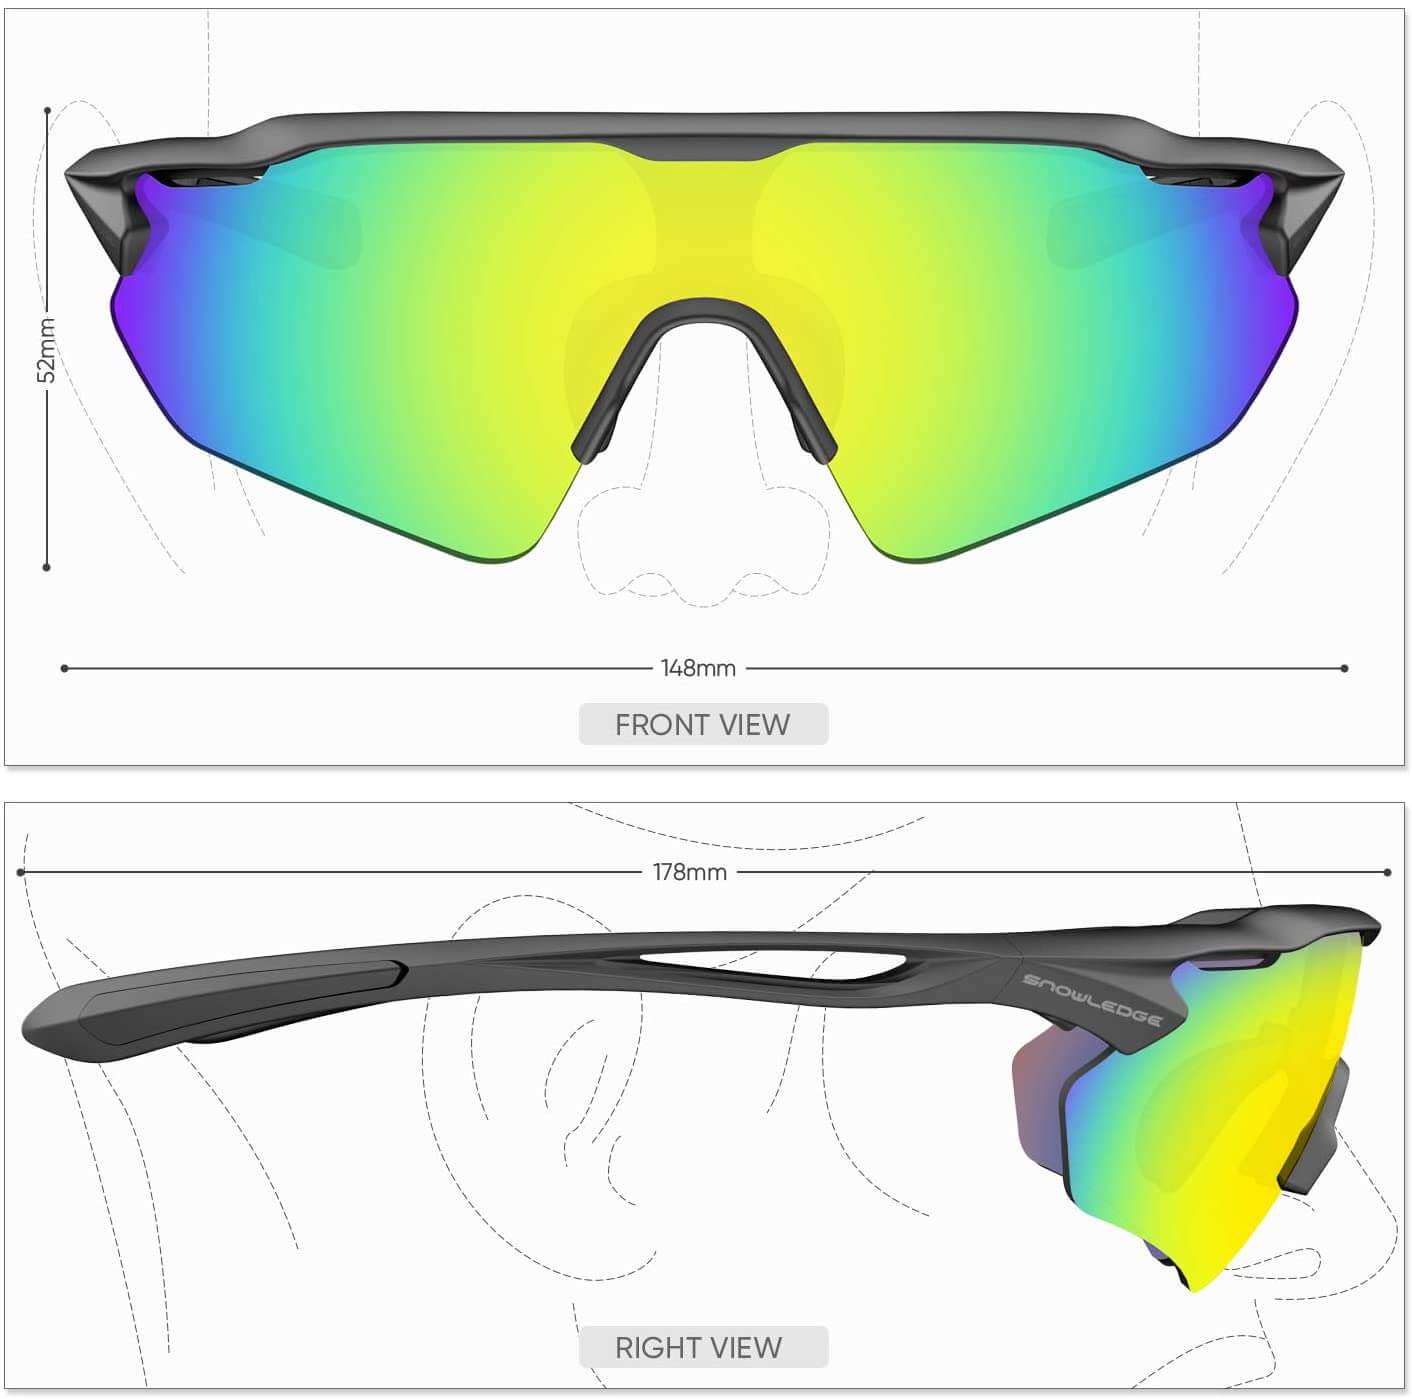 Cycling Glasses, TR90 Unbreakable Frame Polarized Anti-UV400 Sports Sunglasses